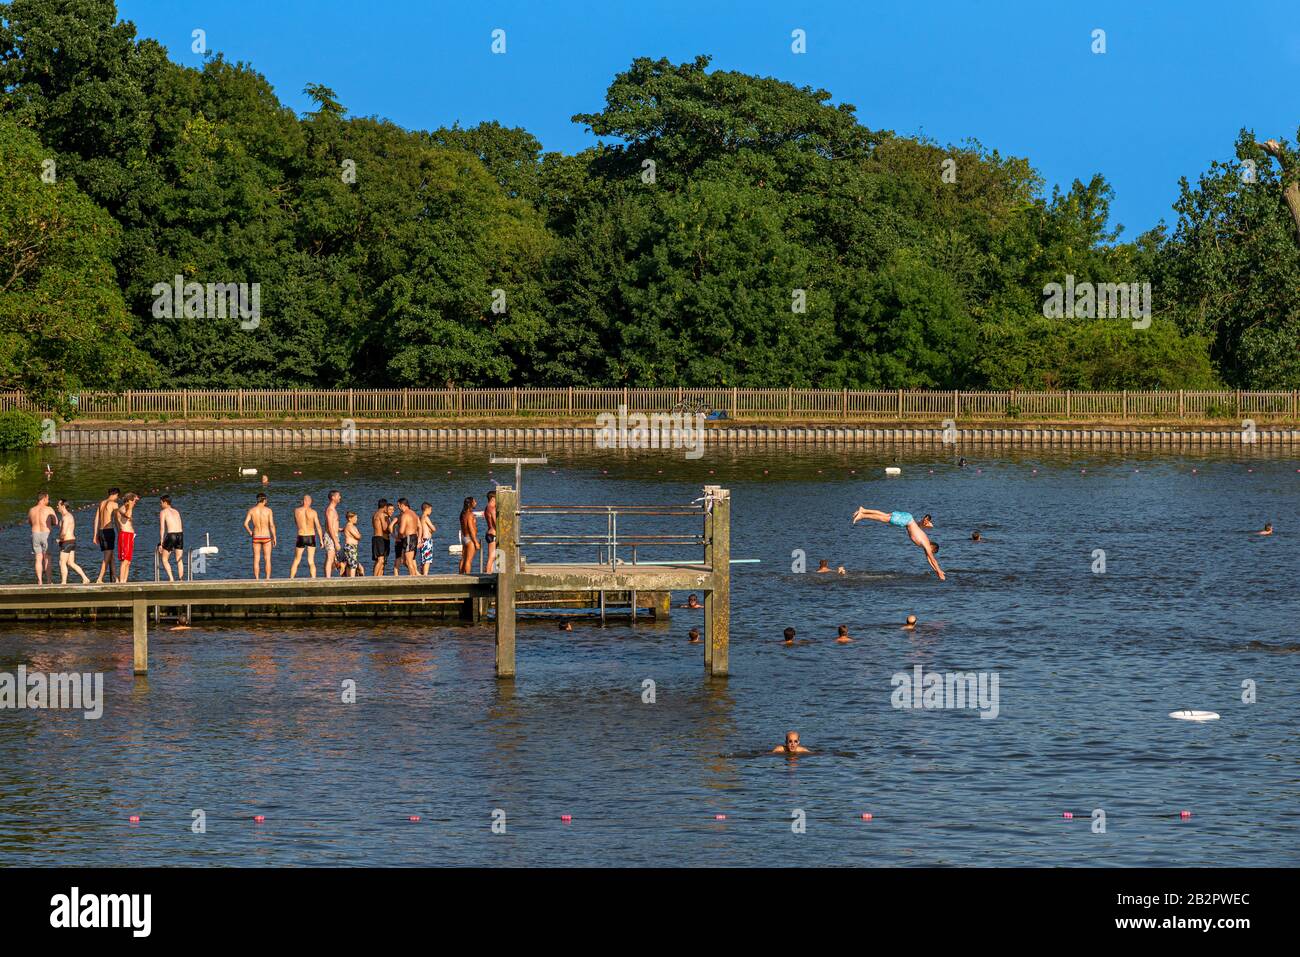 Men's swimming pond in Hampstead Heath, London, England, UK Stock Photo